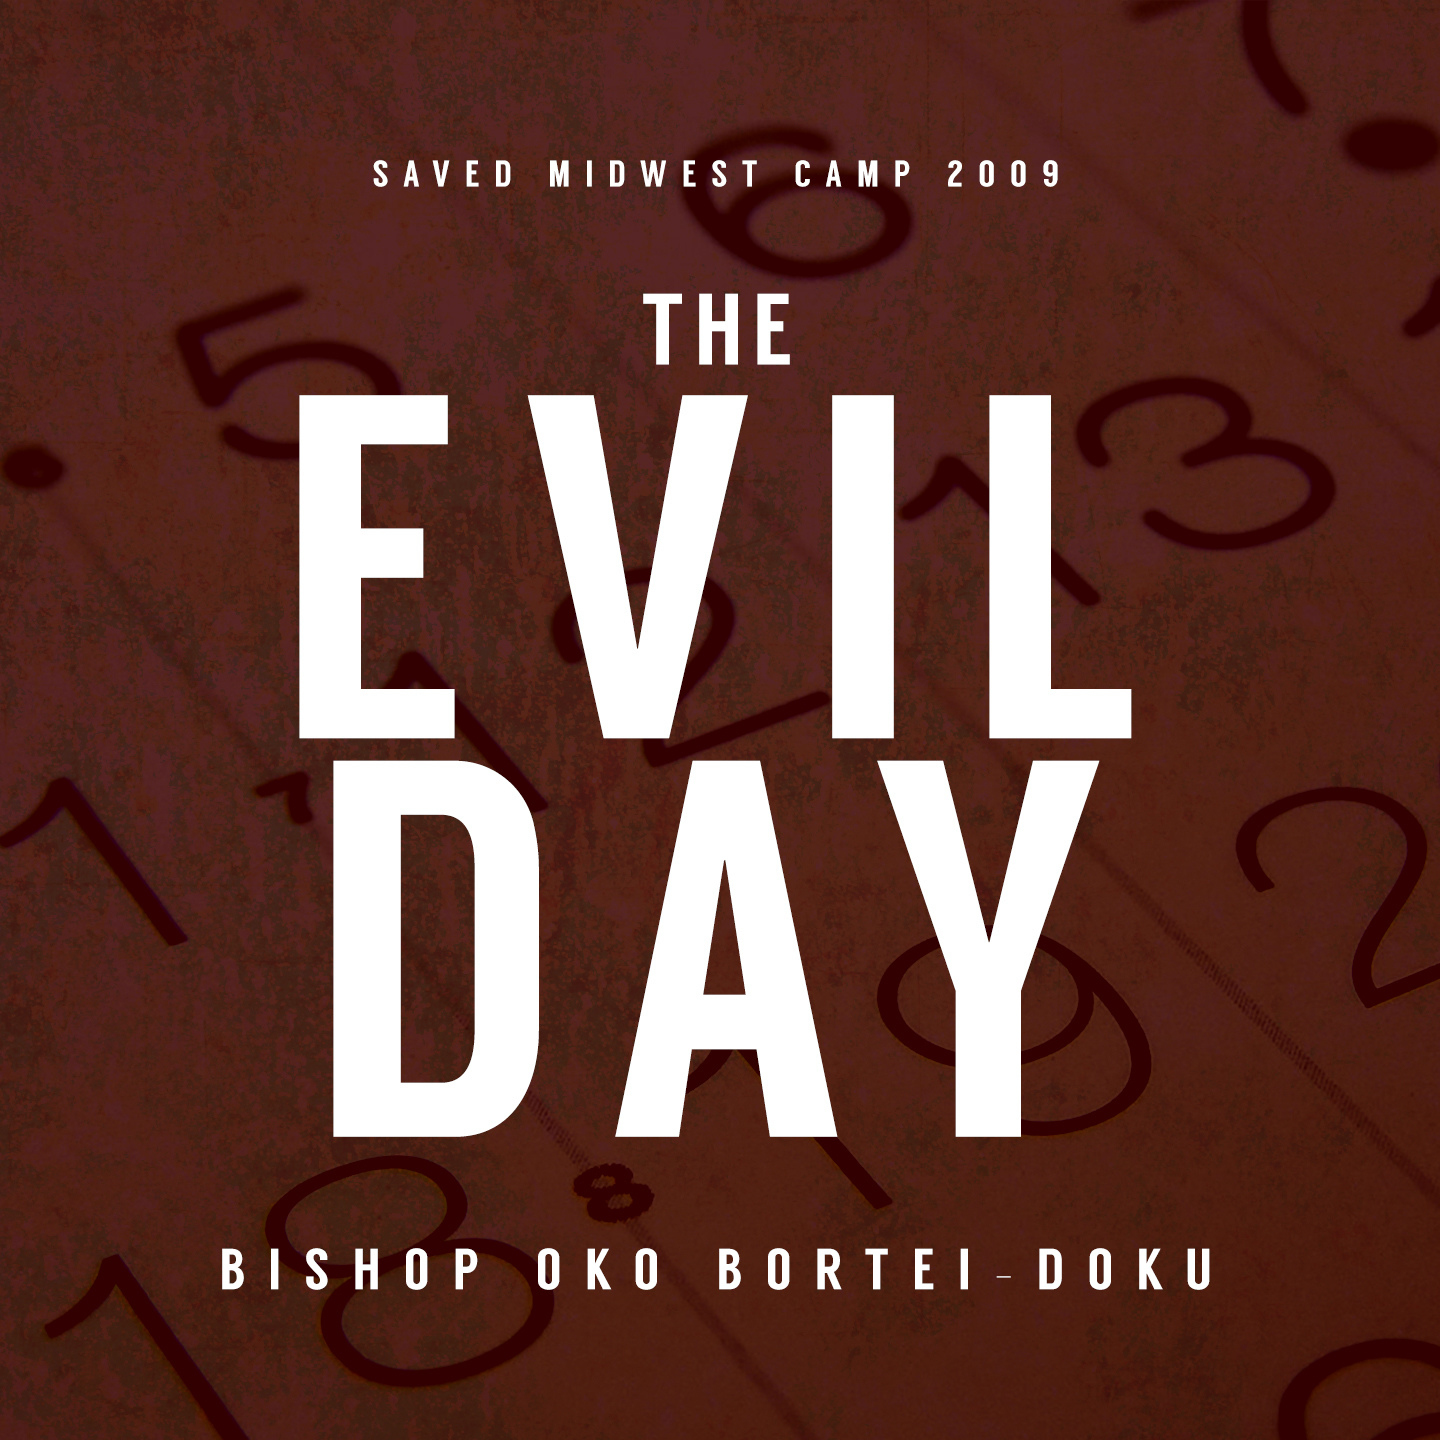 Bishop Oko Bortei-Doku - The Evil Day - 1. Intro